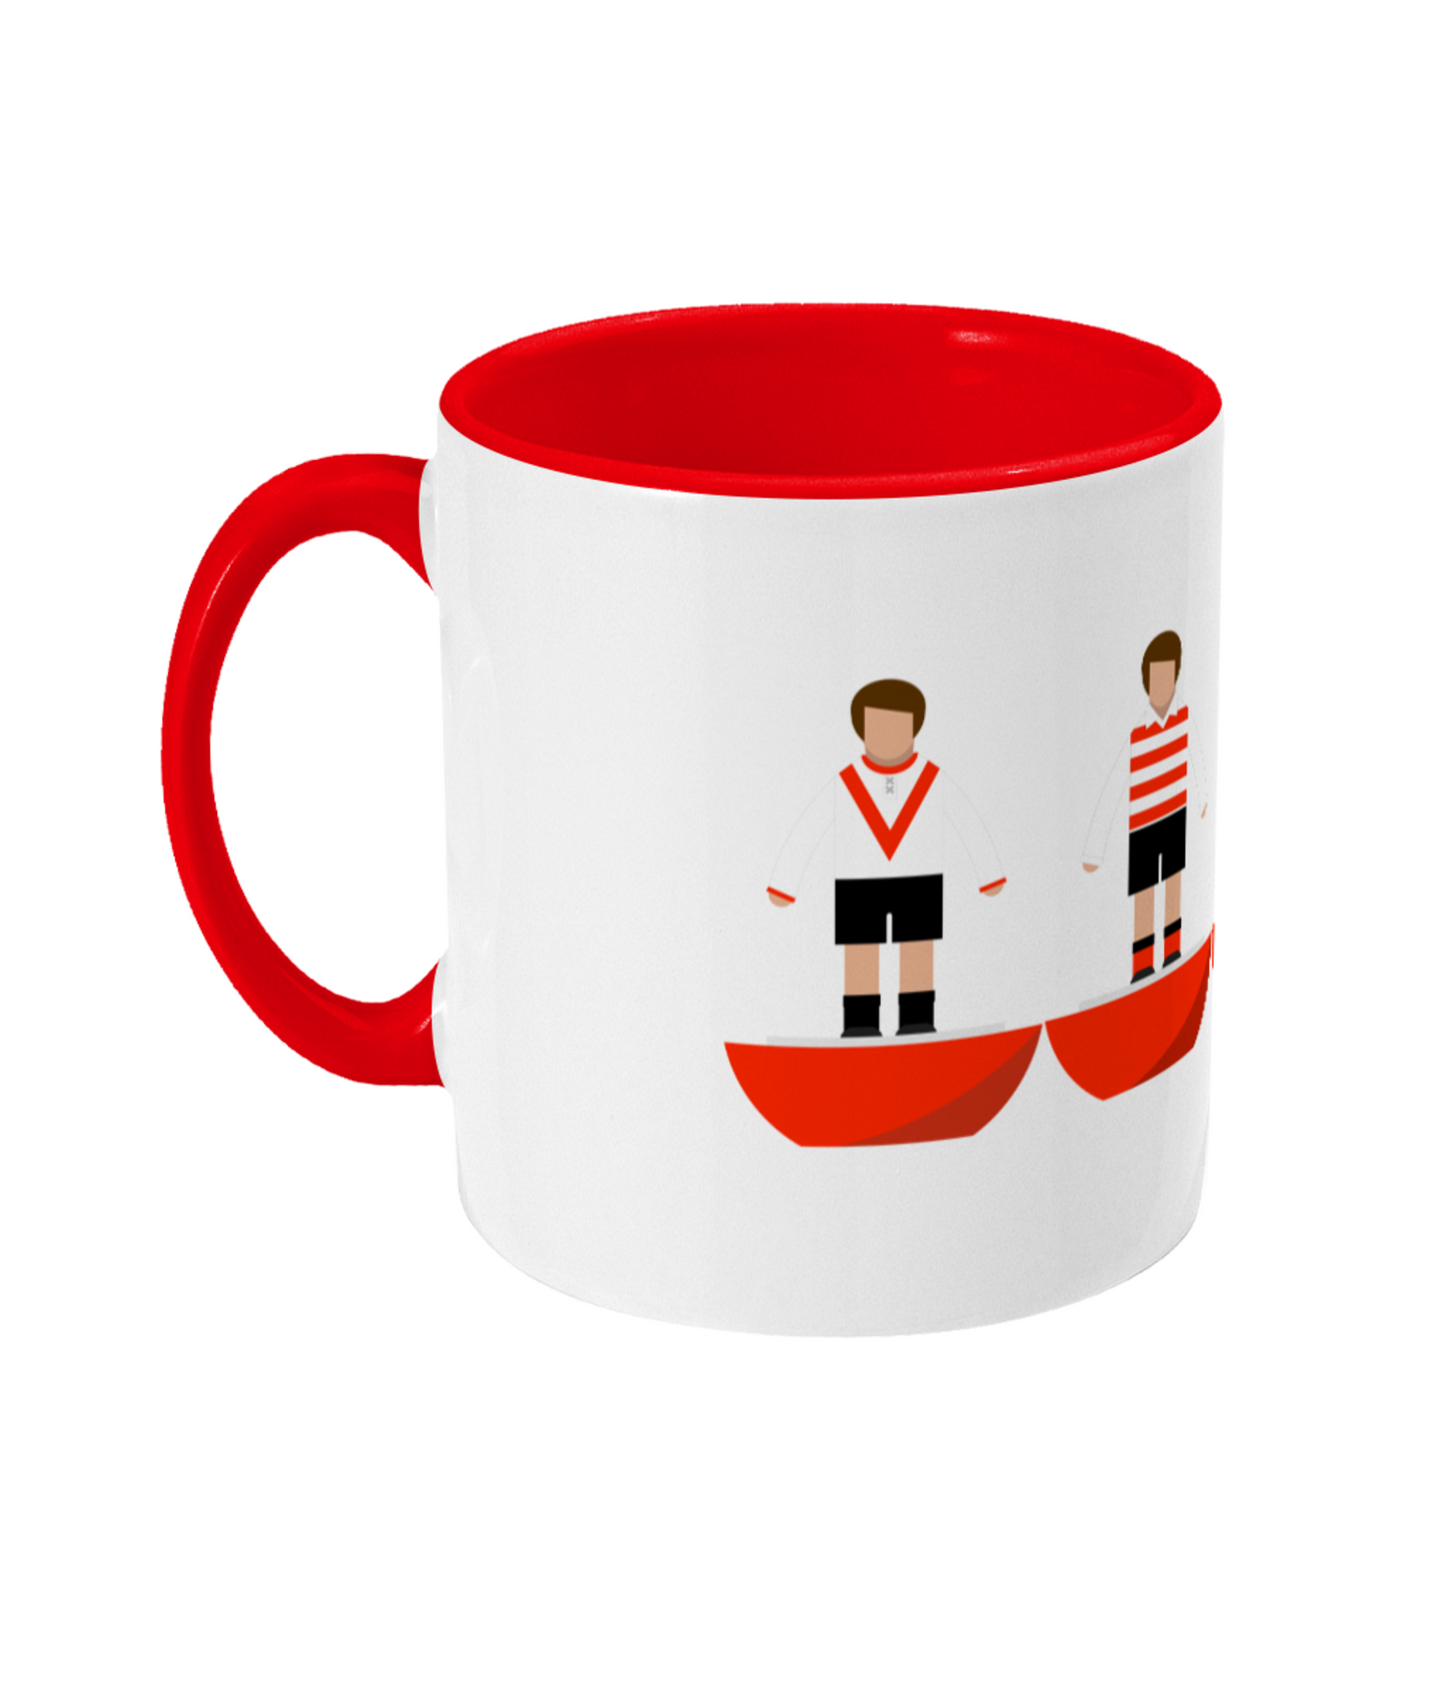 Football Kits 'Leyton Orient combined' Mug